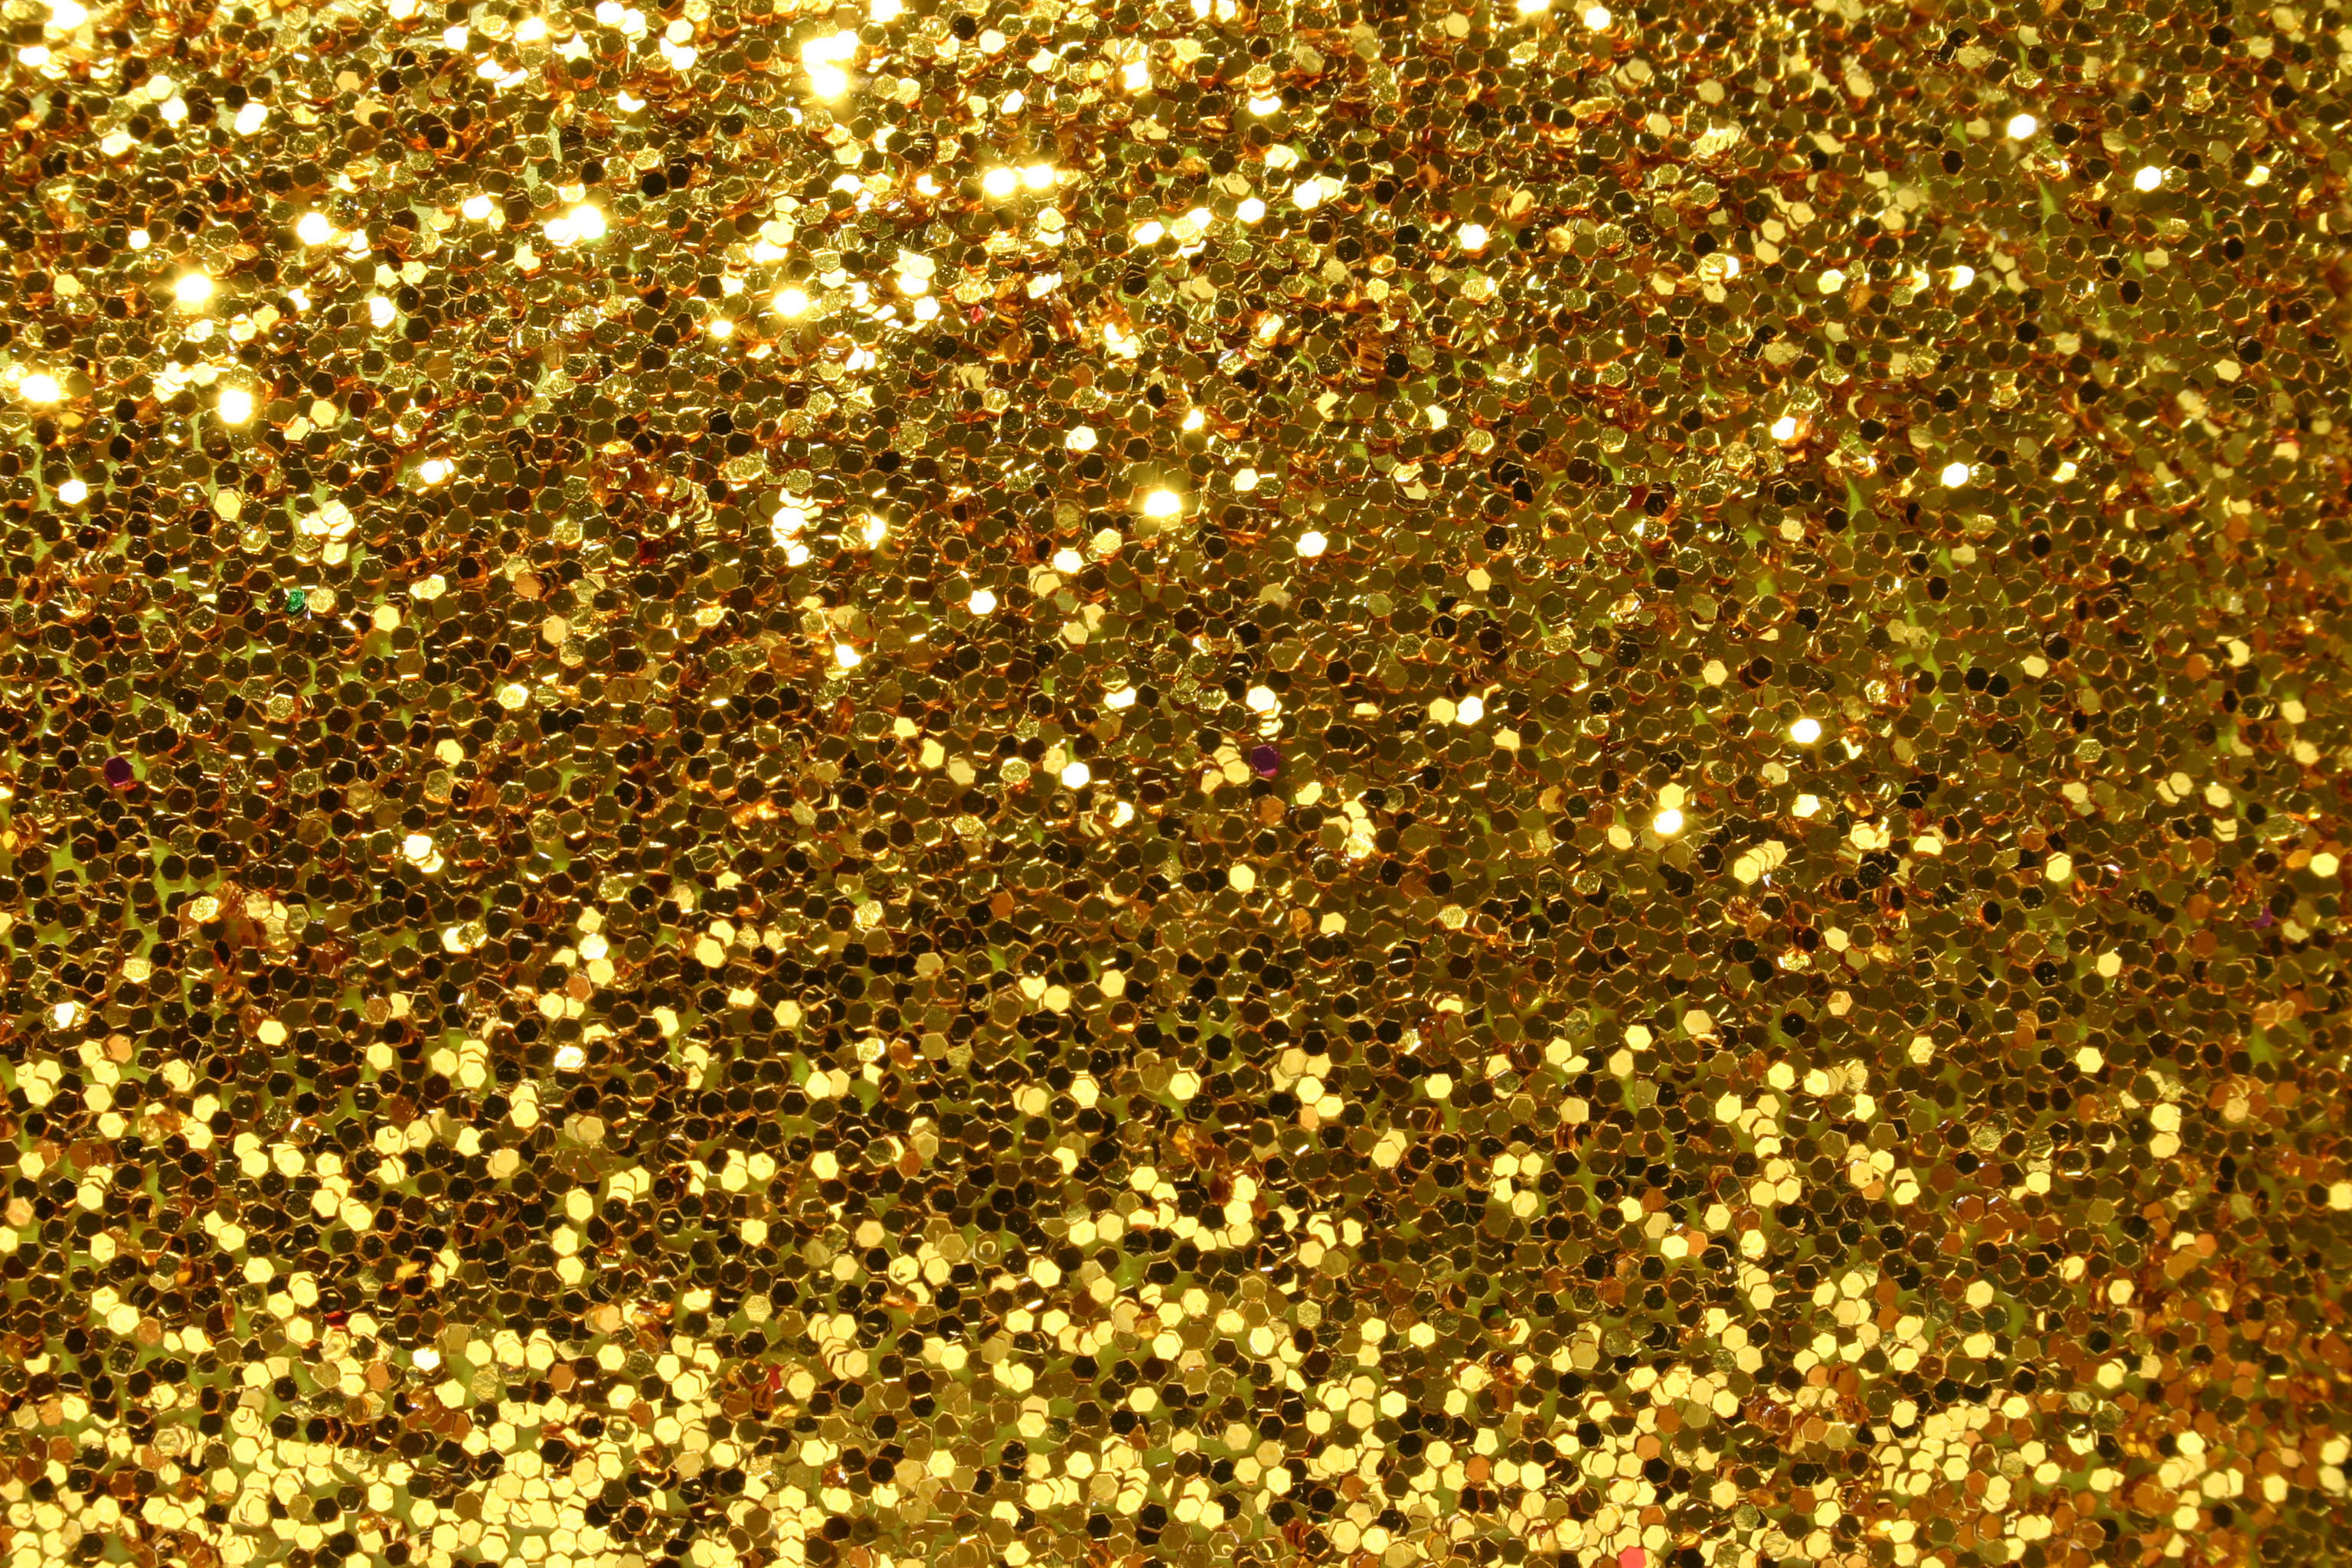  Gold Glitter Backgrounds HQ Backgrounds FreeCreatives